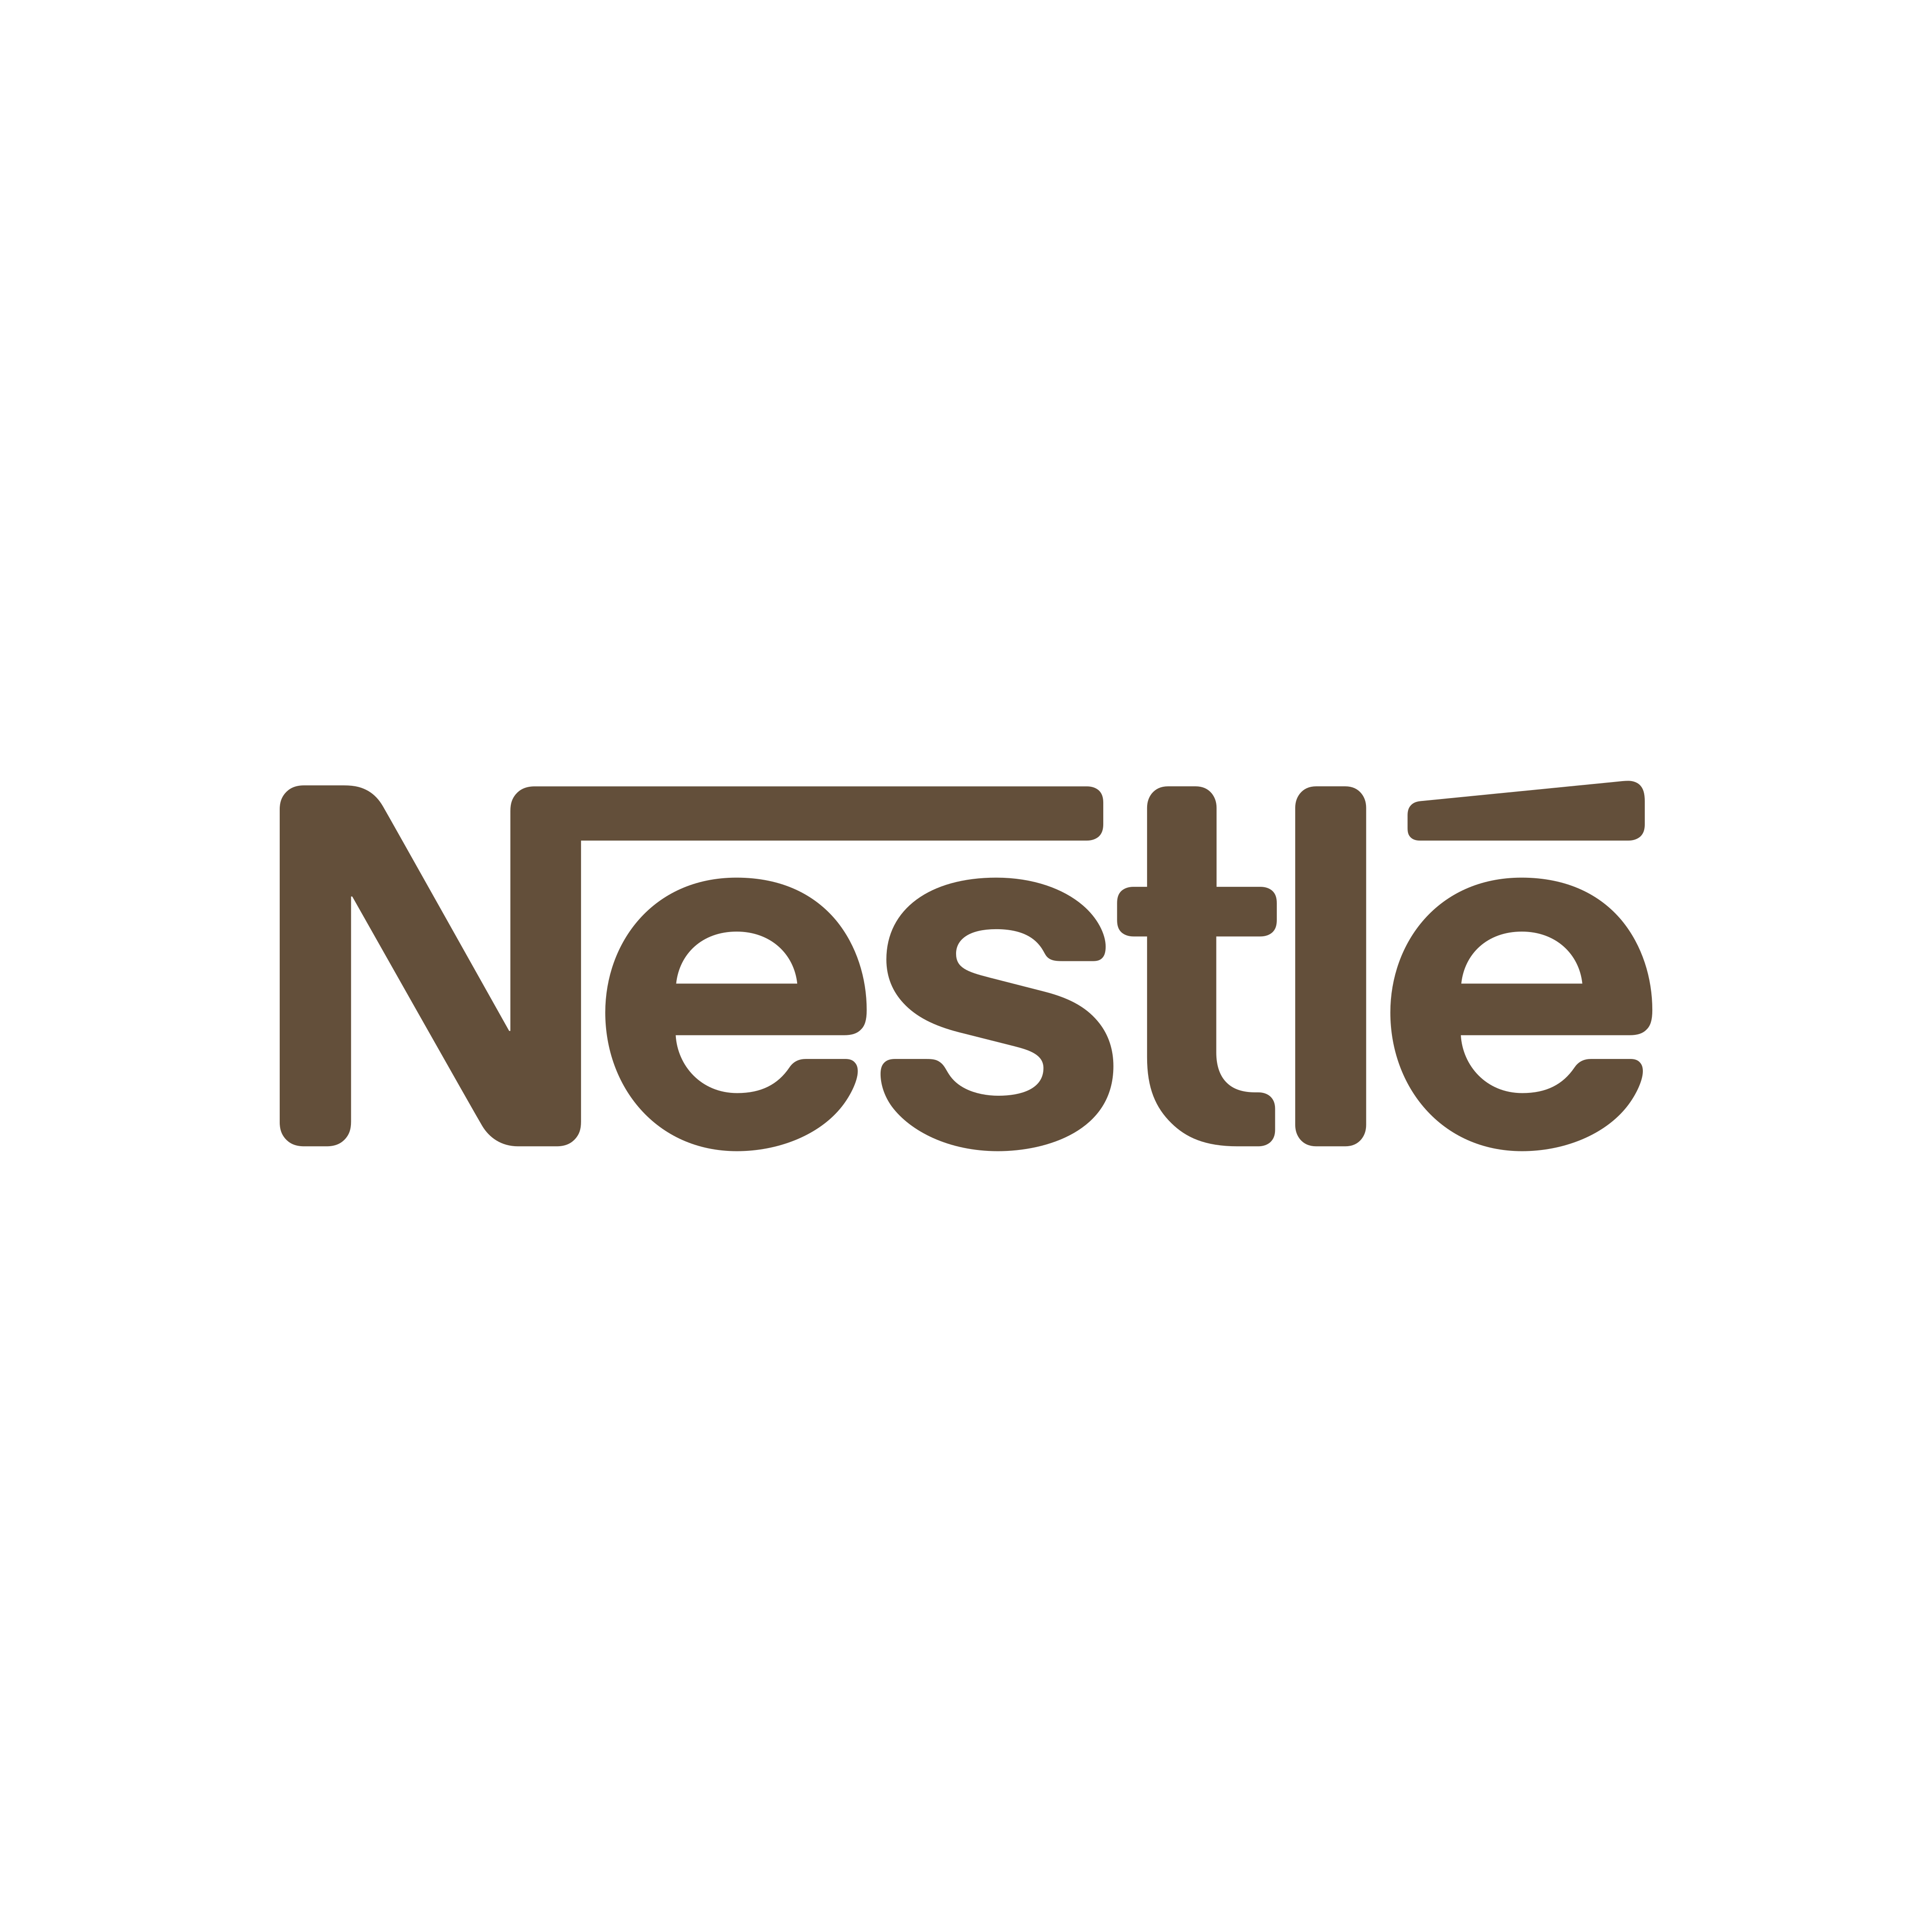 Nestlé Logo PNG.